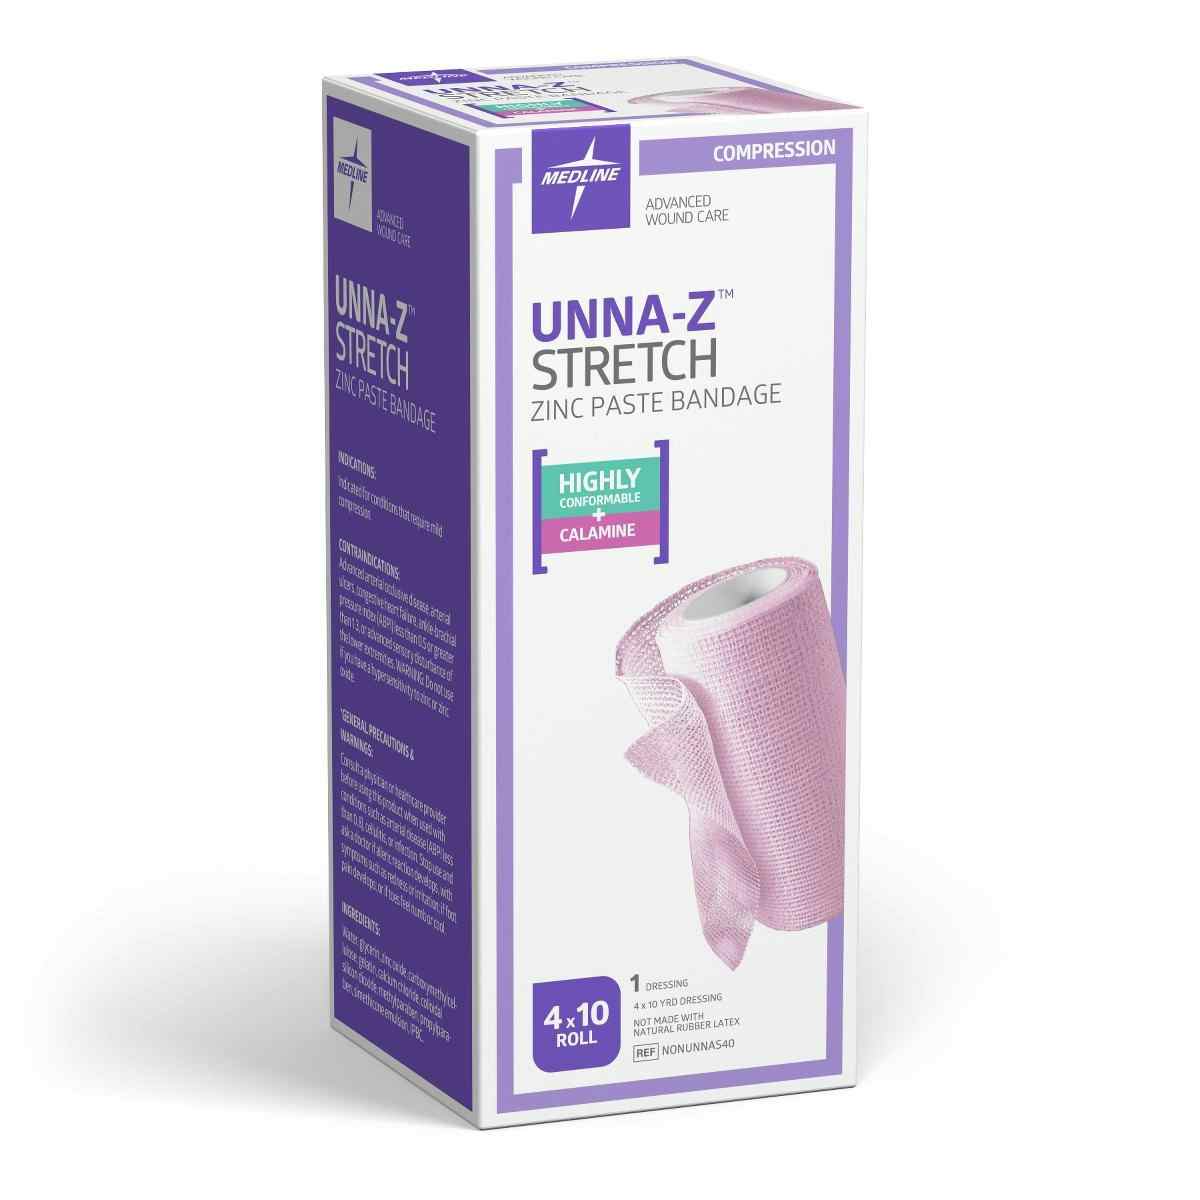 Medline Unna-Z Stretch Zinc Paste Bandage with Calamine, NONUNNAS40H, 4" X 10 yd. - 1 Roll